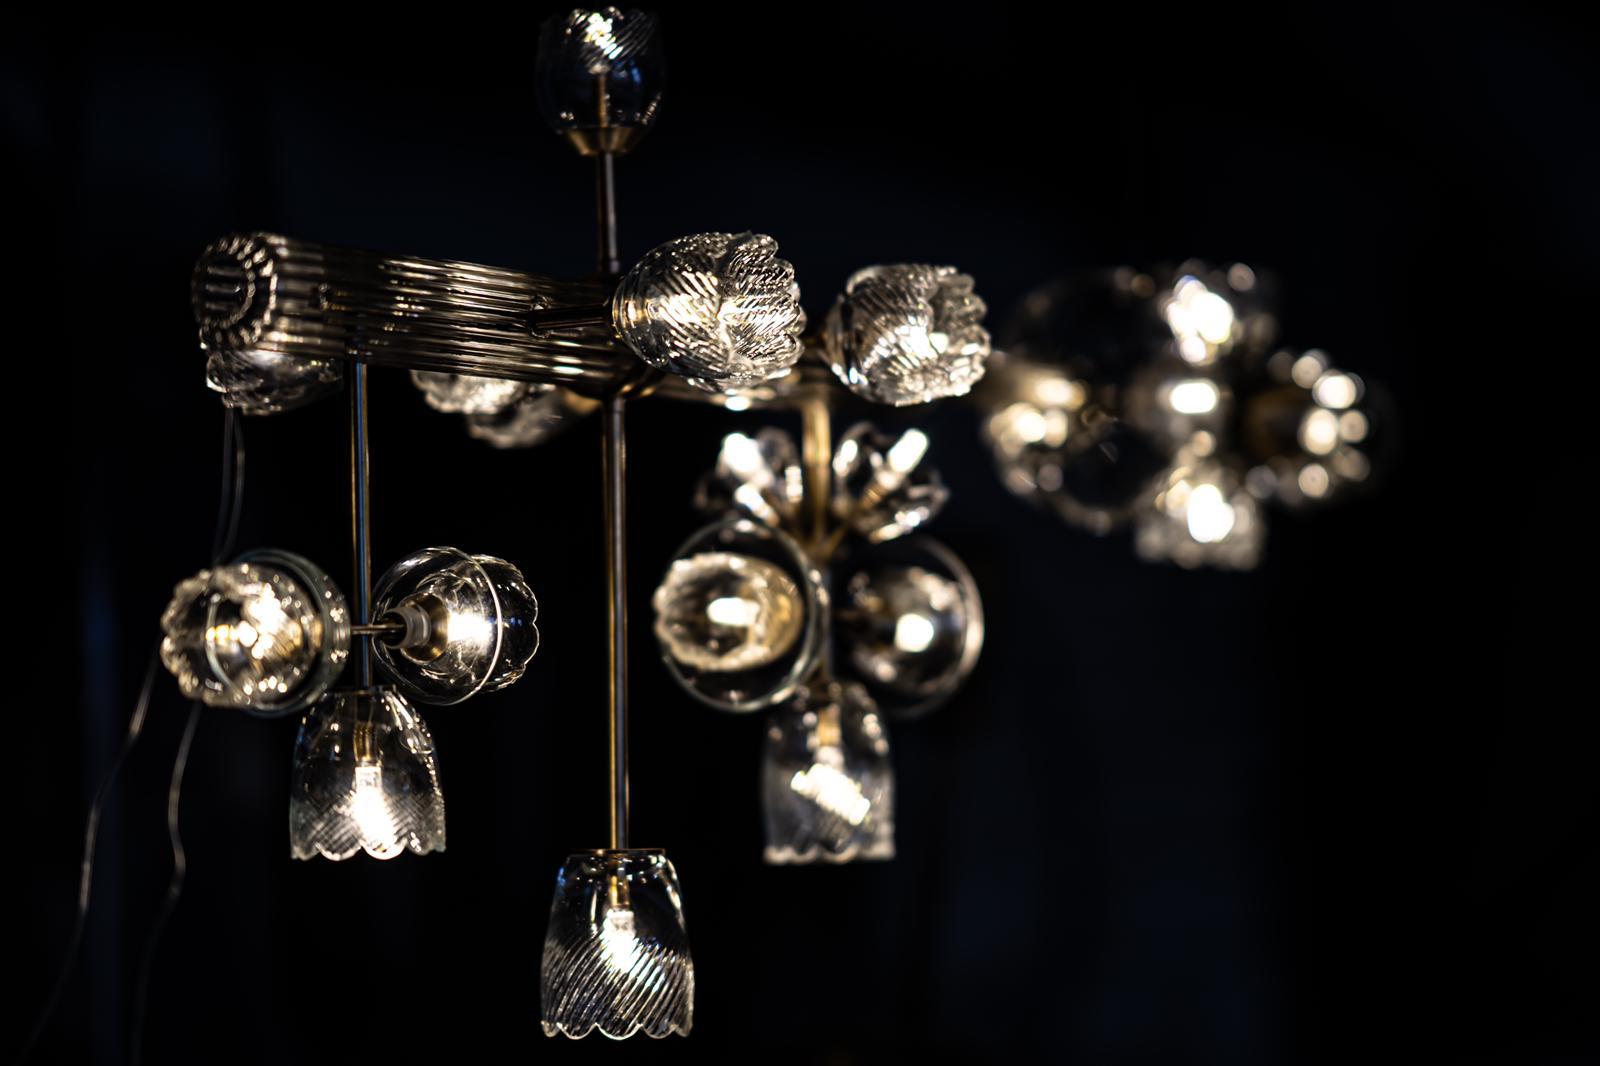 Welded transparent lungo lamp by Sema Topaloglu